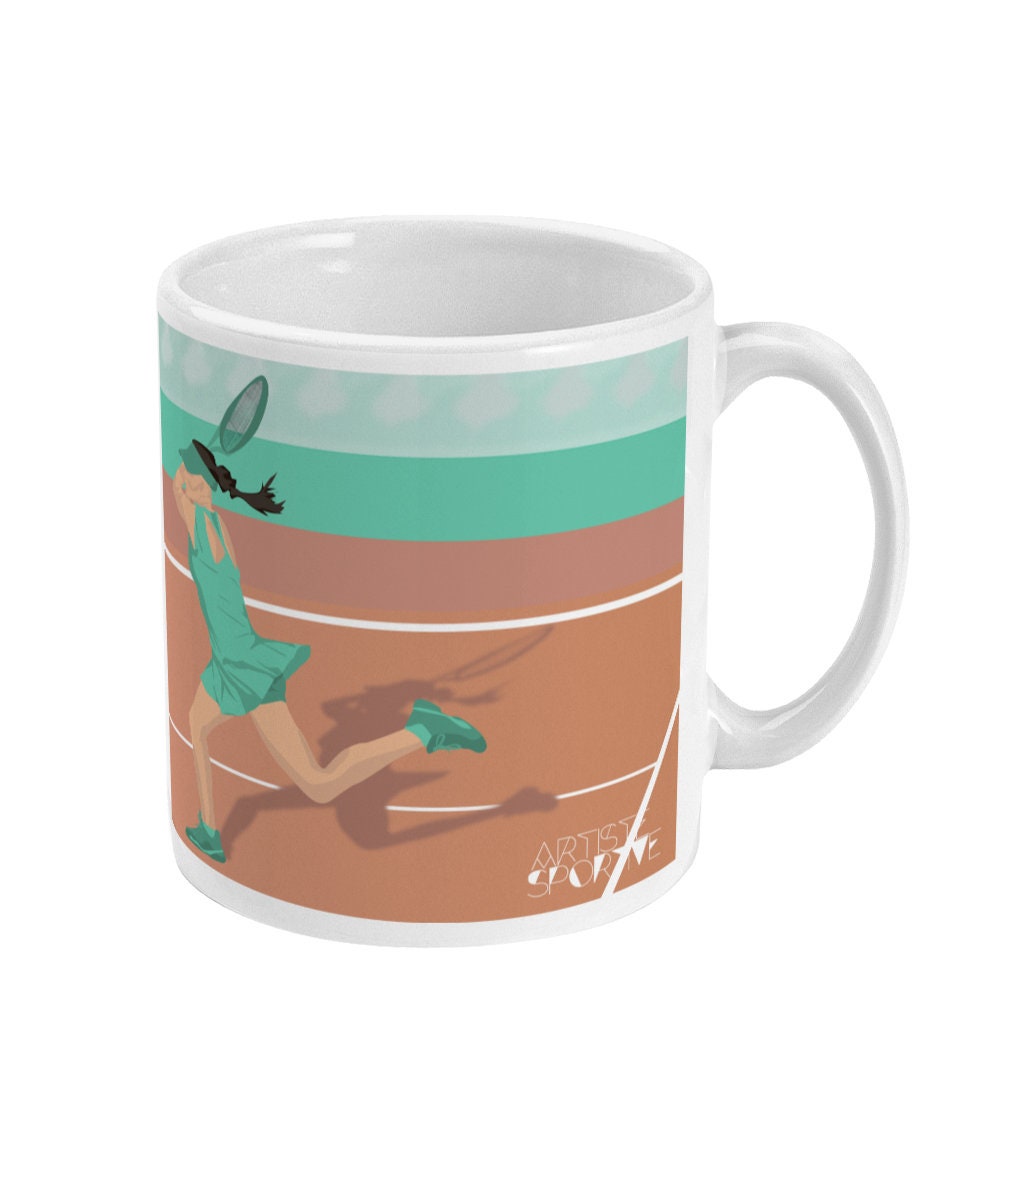 Cup or mug "Tennis Player" - Customizable